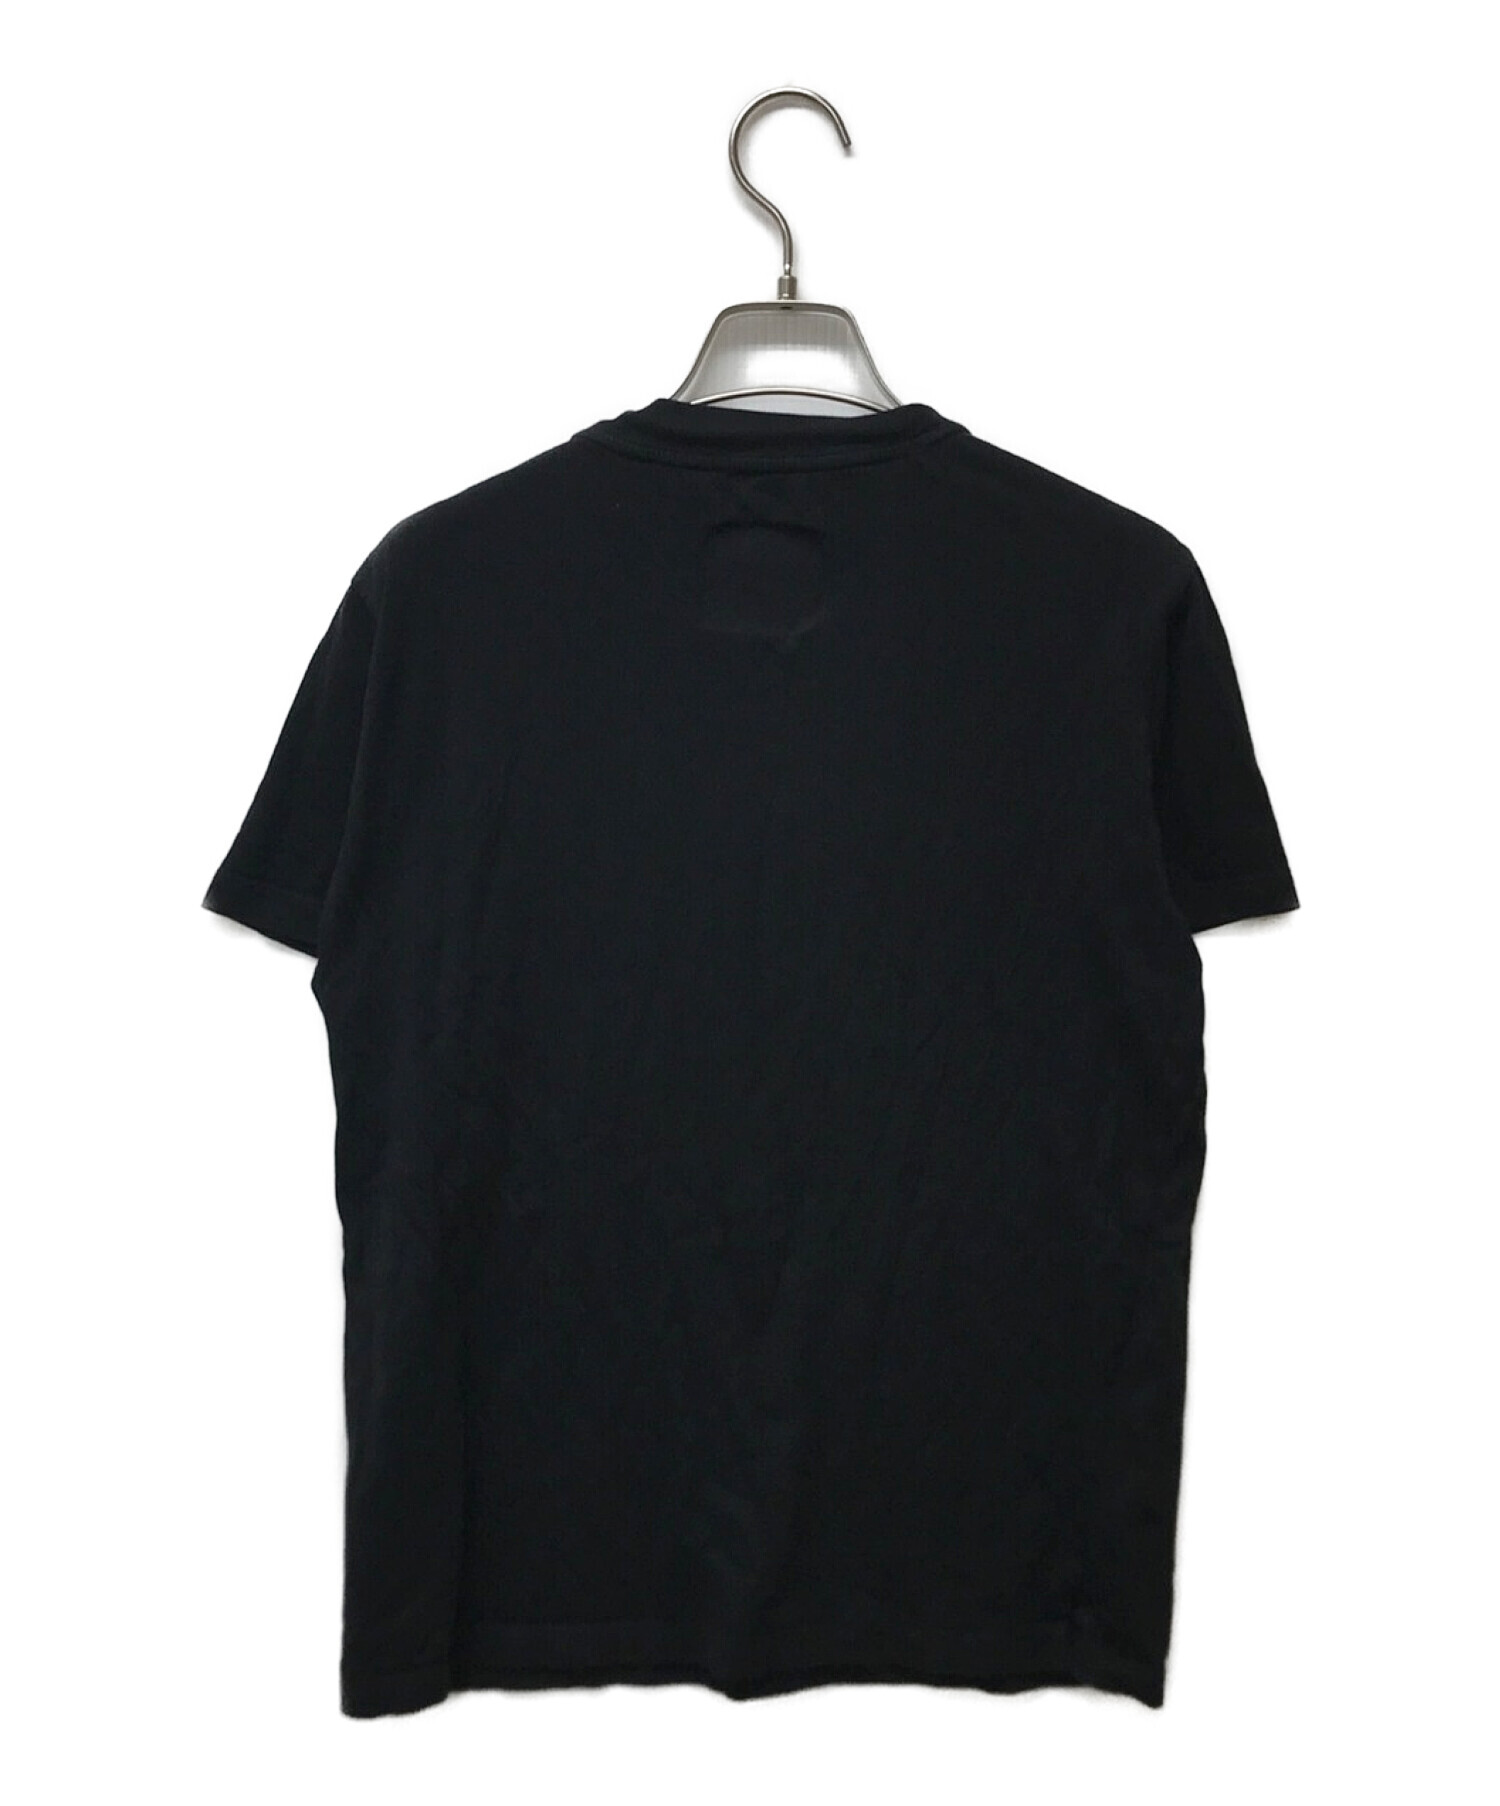 VALENTINO (ヴァレンティノ) ロックスタッズTシャツ ブラック サイズ:表記なし